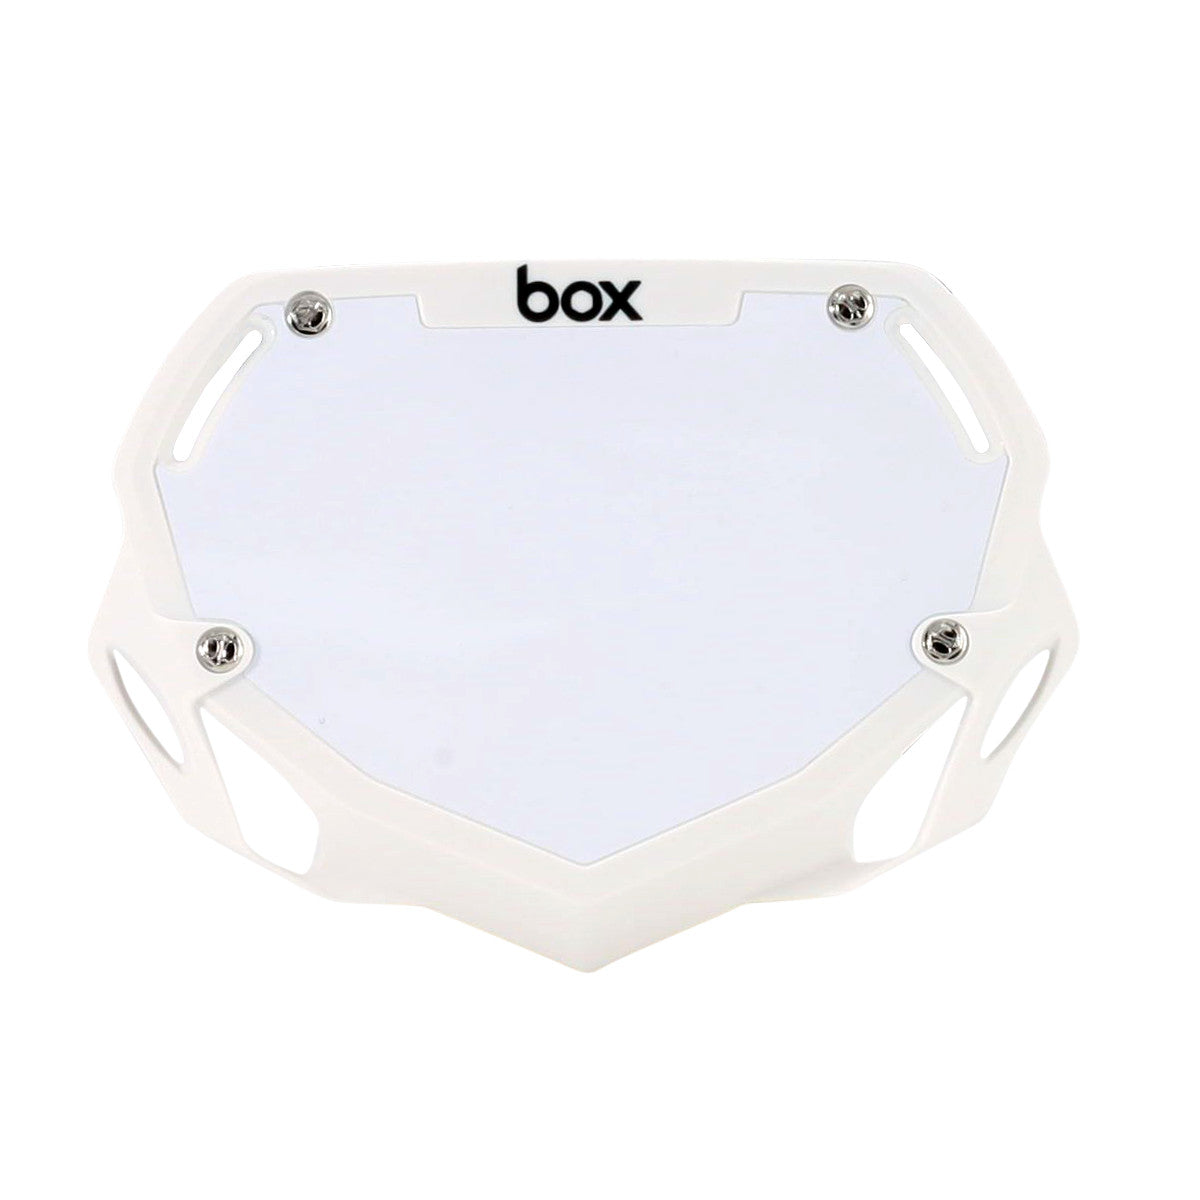 Box Two Mini / Cruiser BMX Number Plate - White